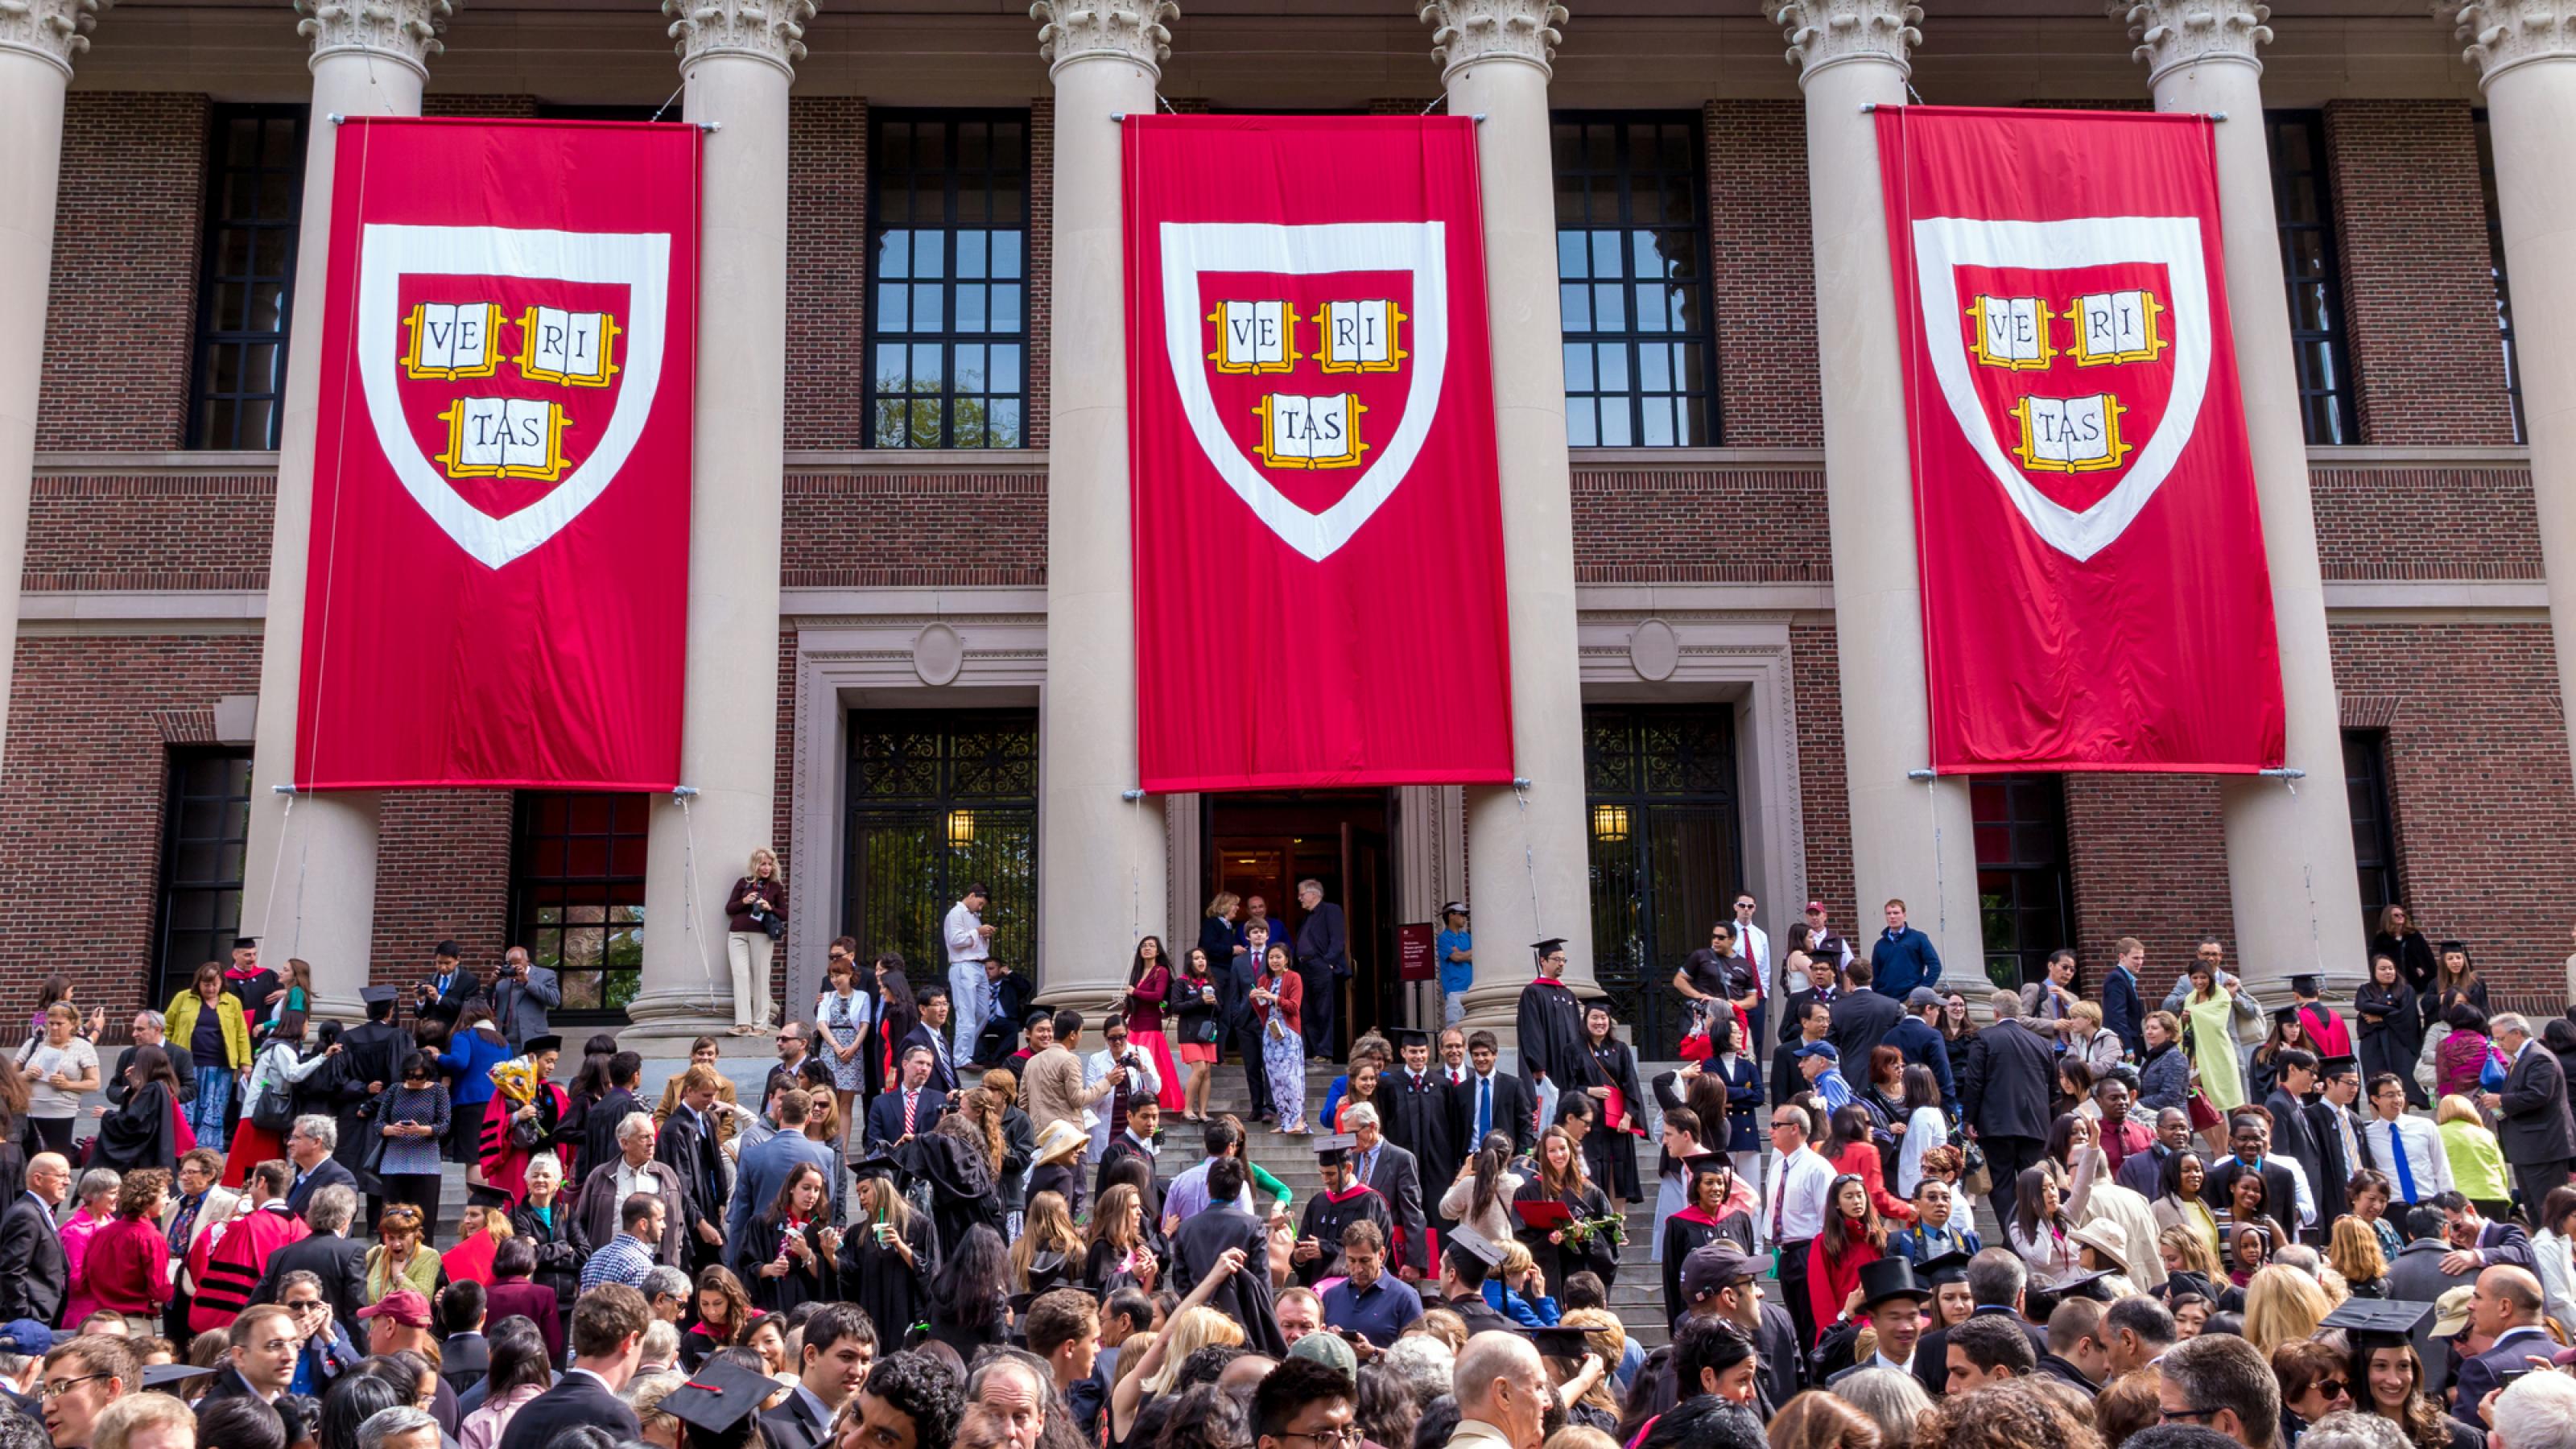 Abschlussfeier an der Universität Harvard bei Boston